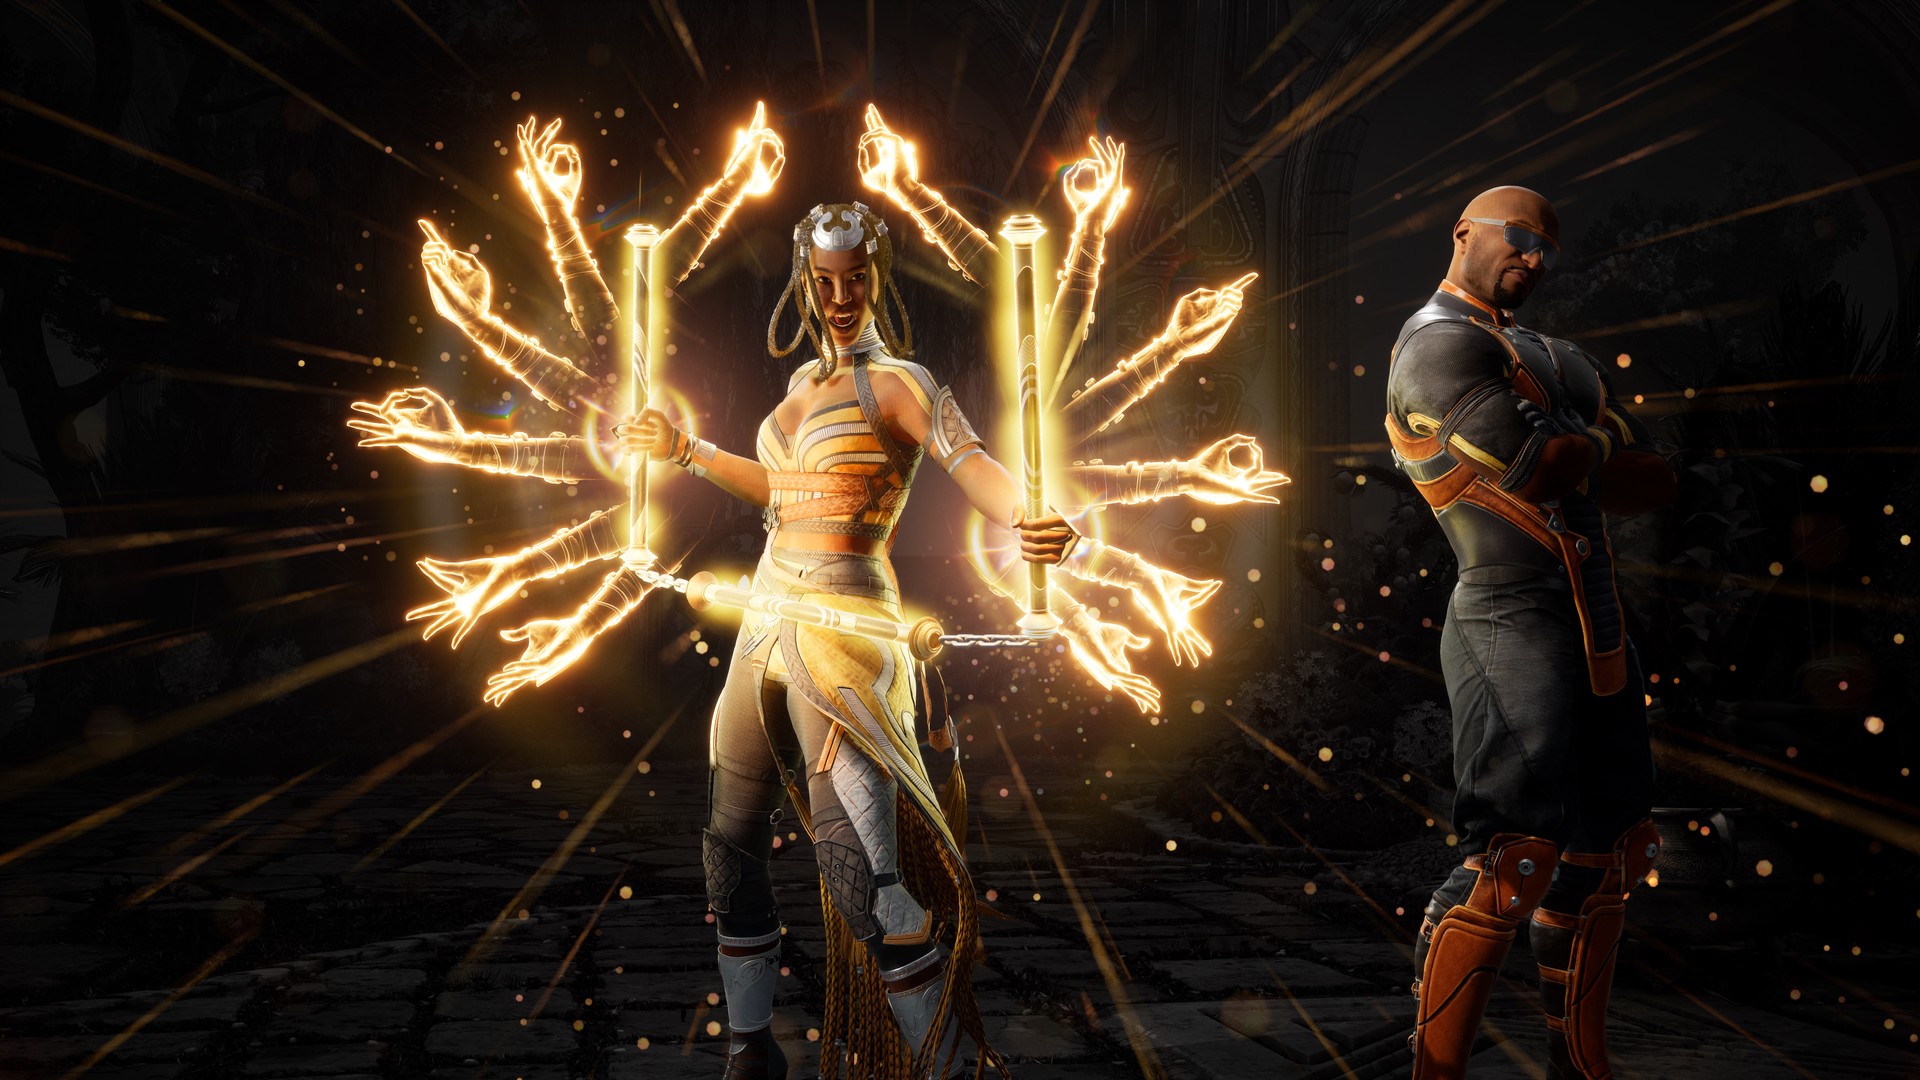 Mortal Kombat 1 terá skin brasileira em homenagem ao funk - Nerdizmo